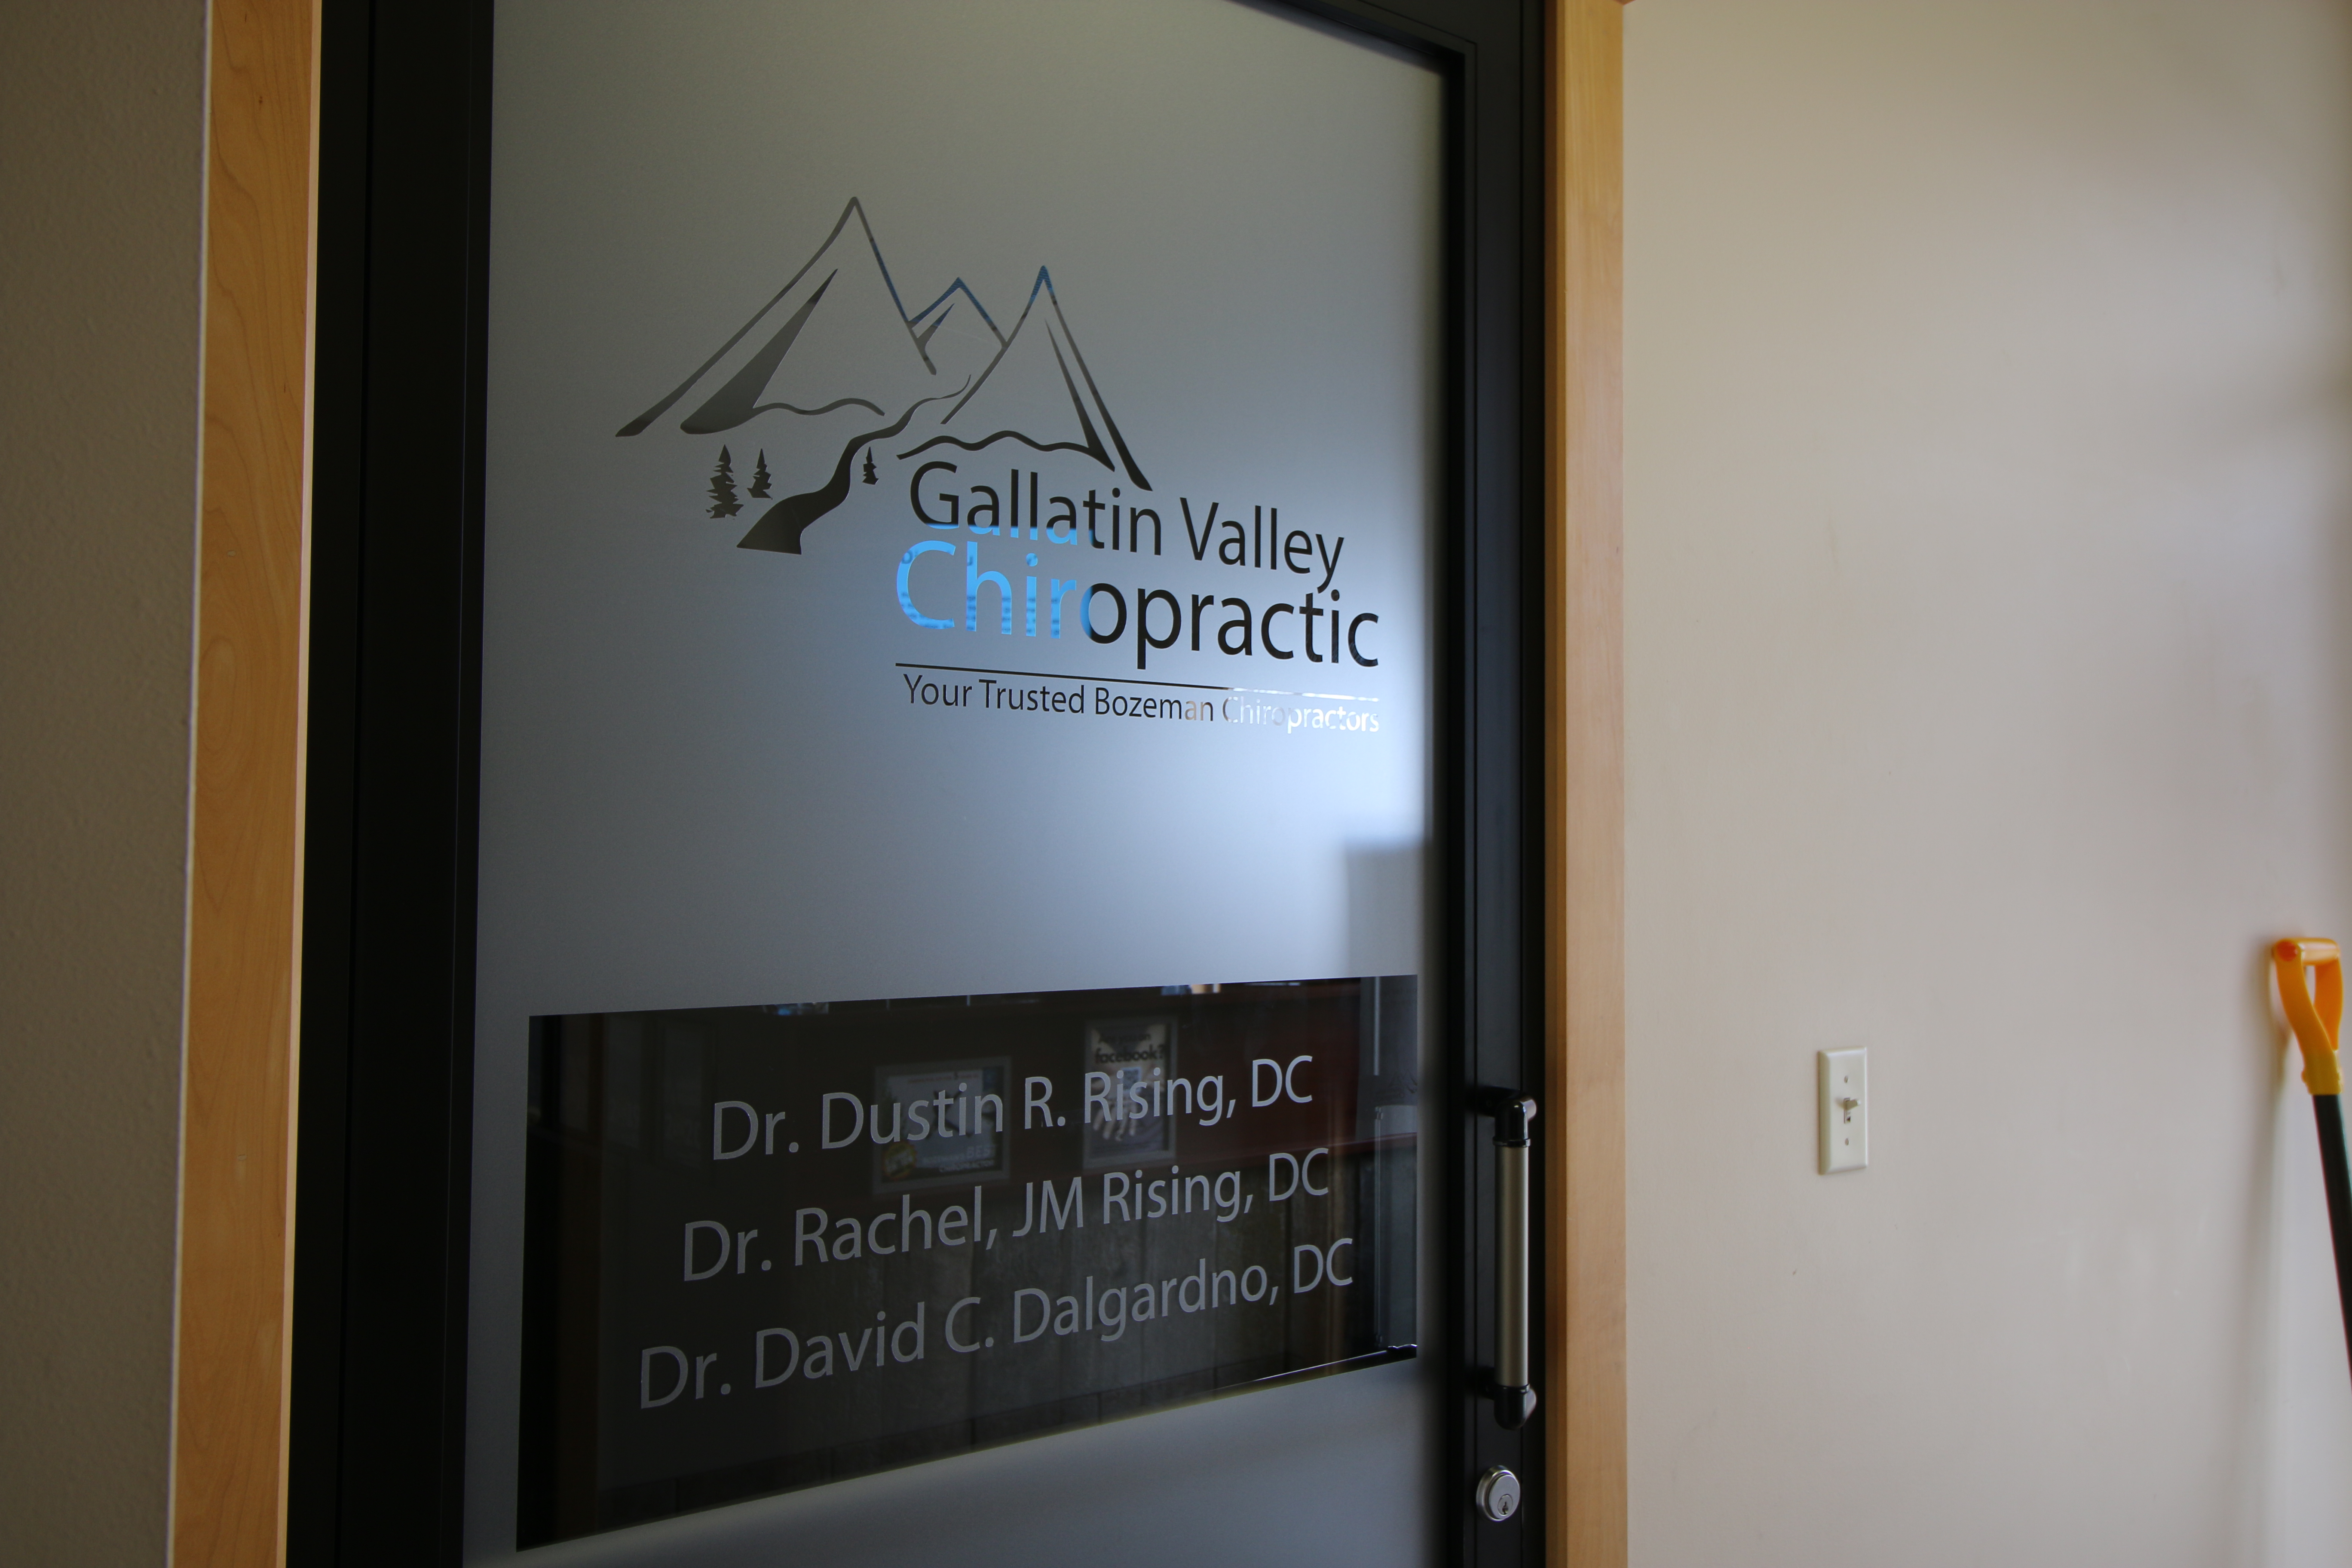 Gallatin Valley Chiropractic